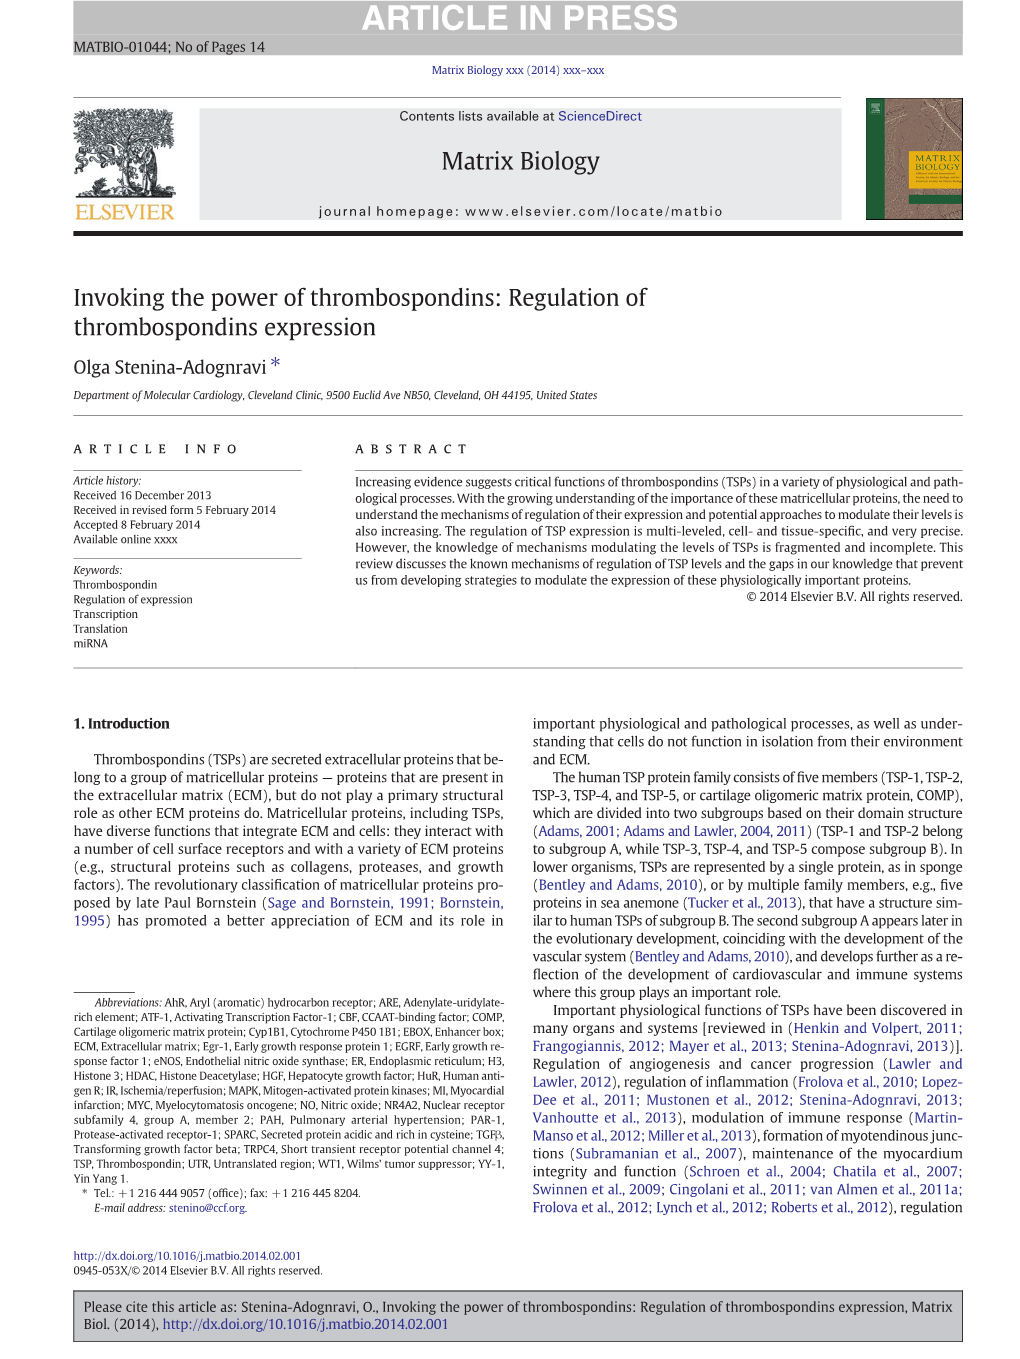 Invoking the Power of Thrombospondins: Regulation of Thrombospondins Expression